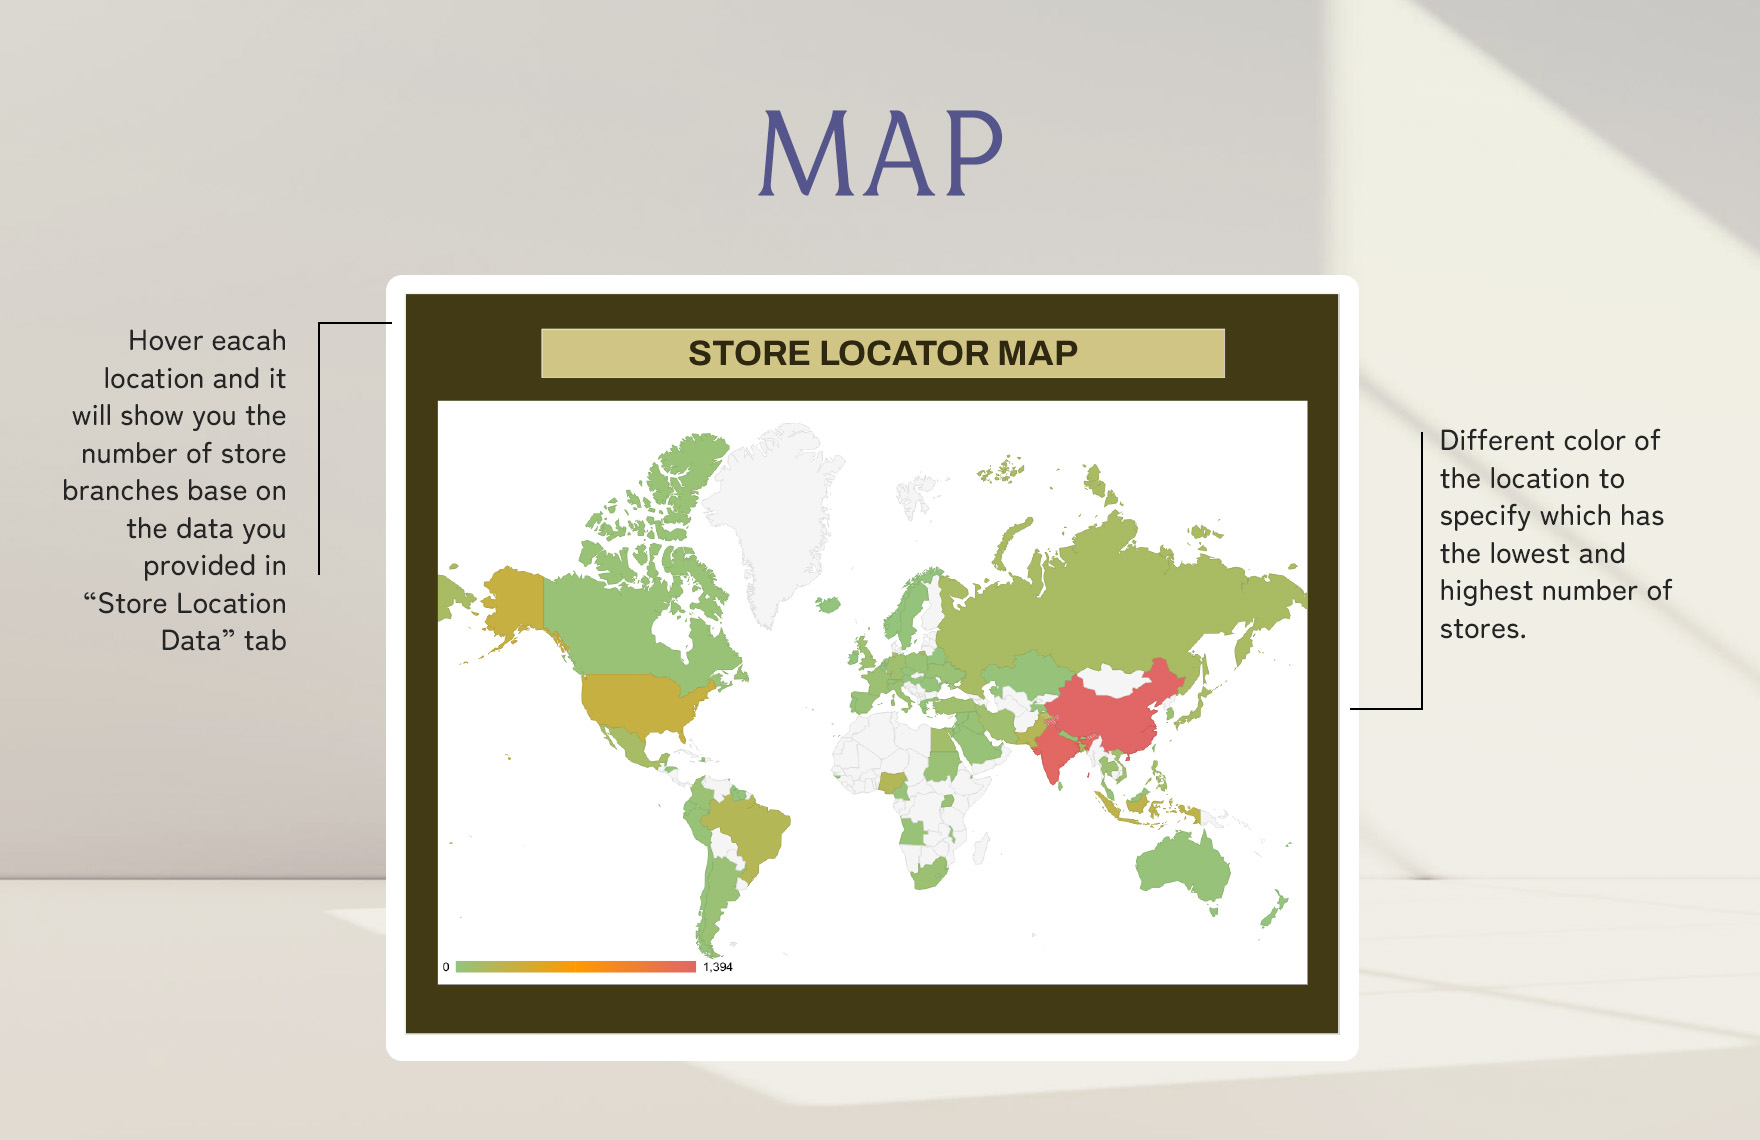 Store Locator Map Template